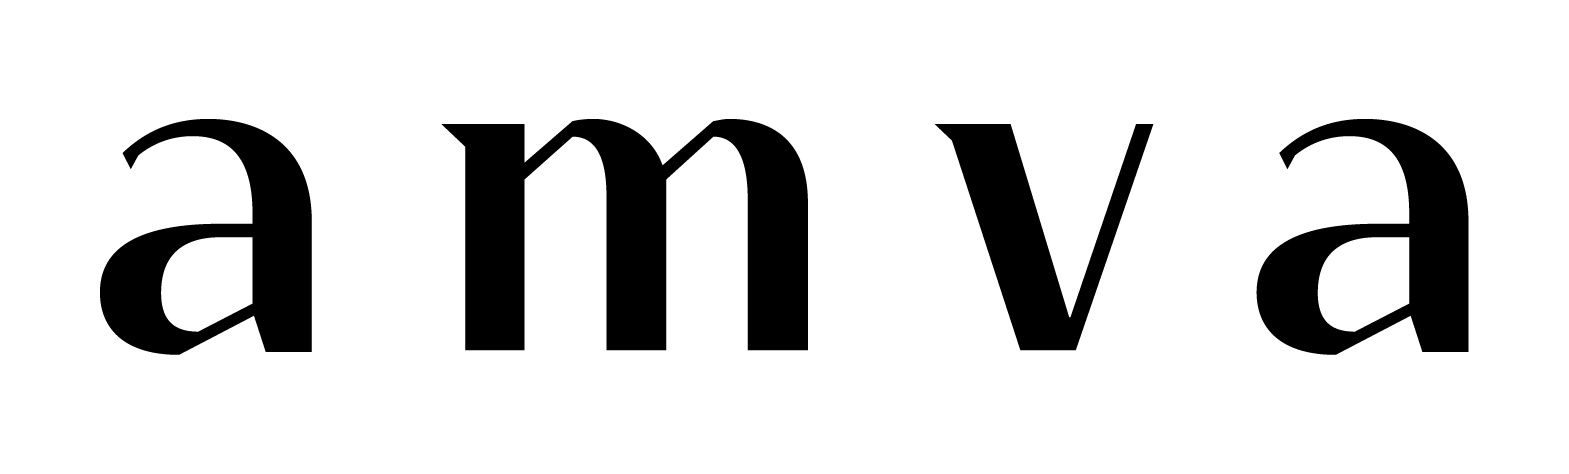 logo noir 100 1